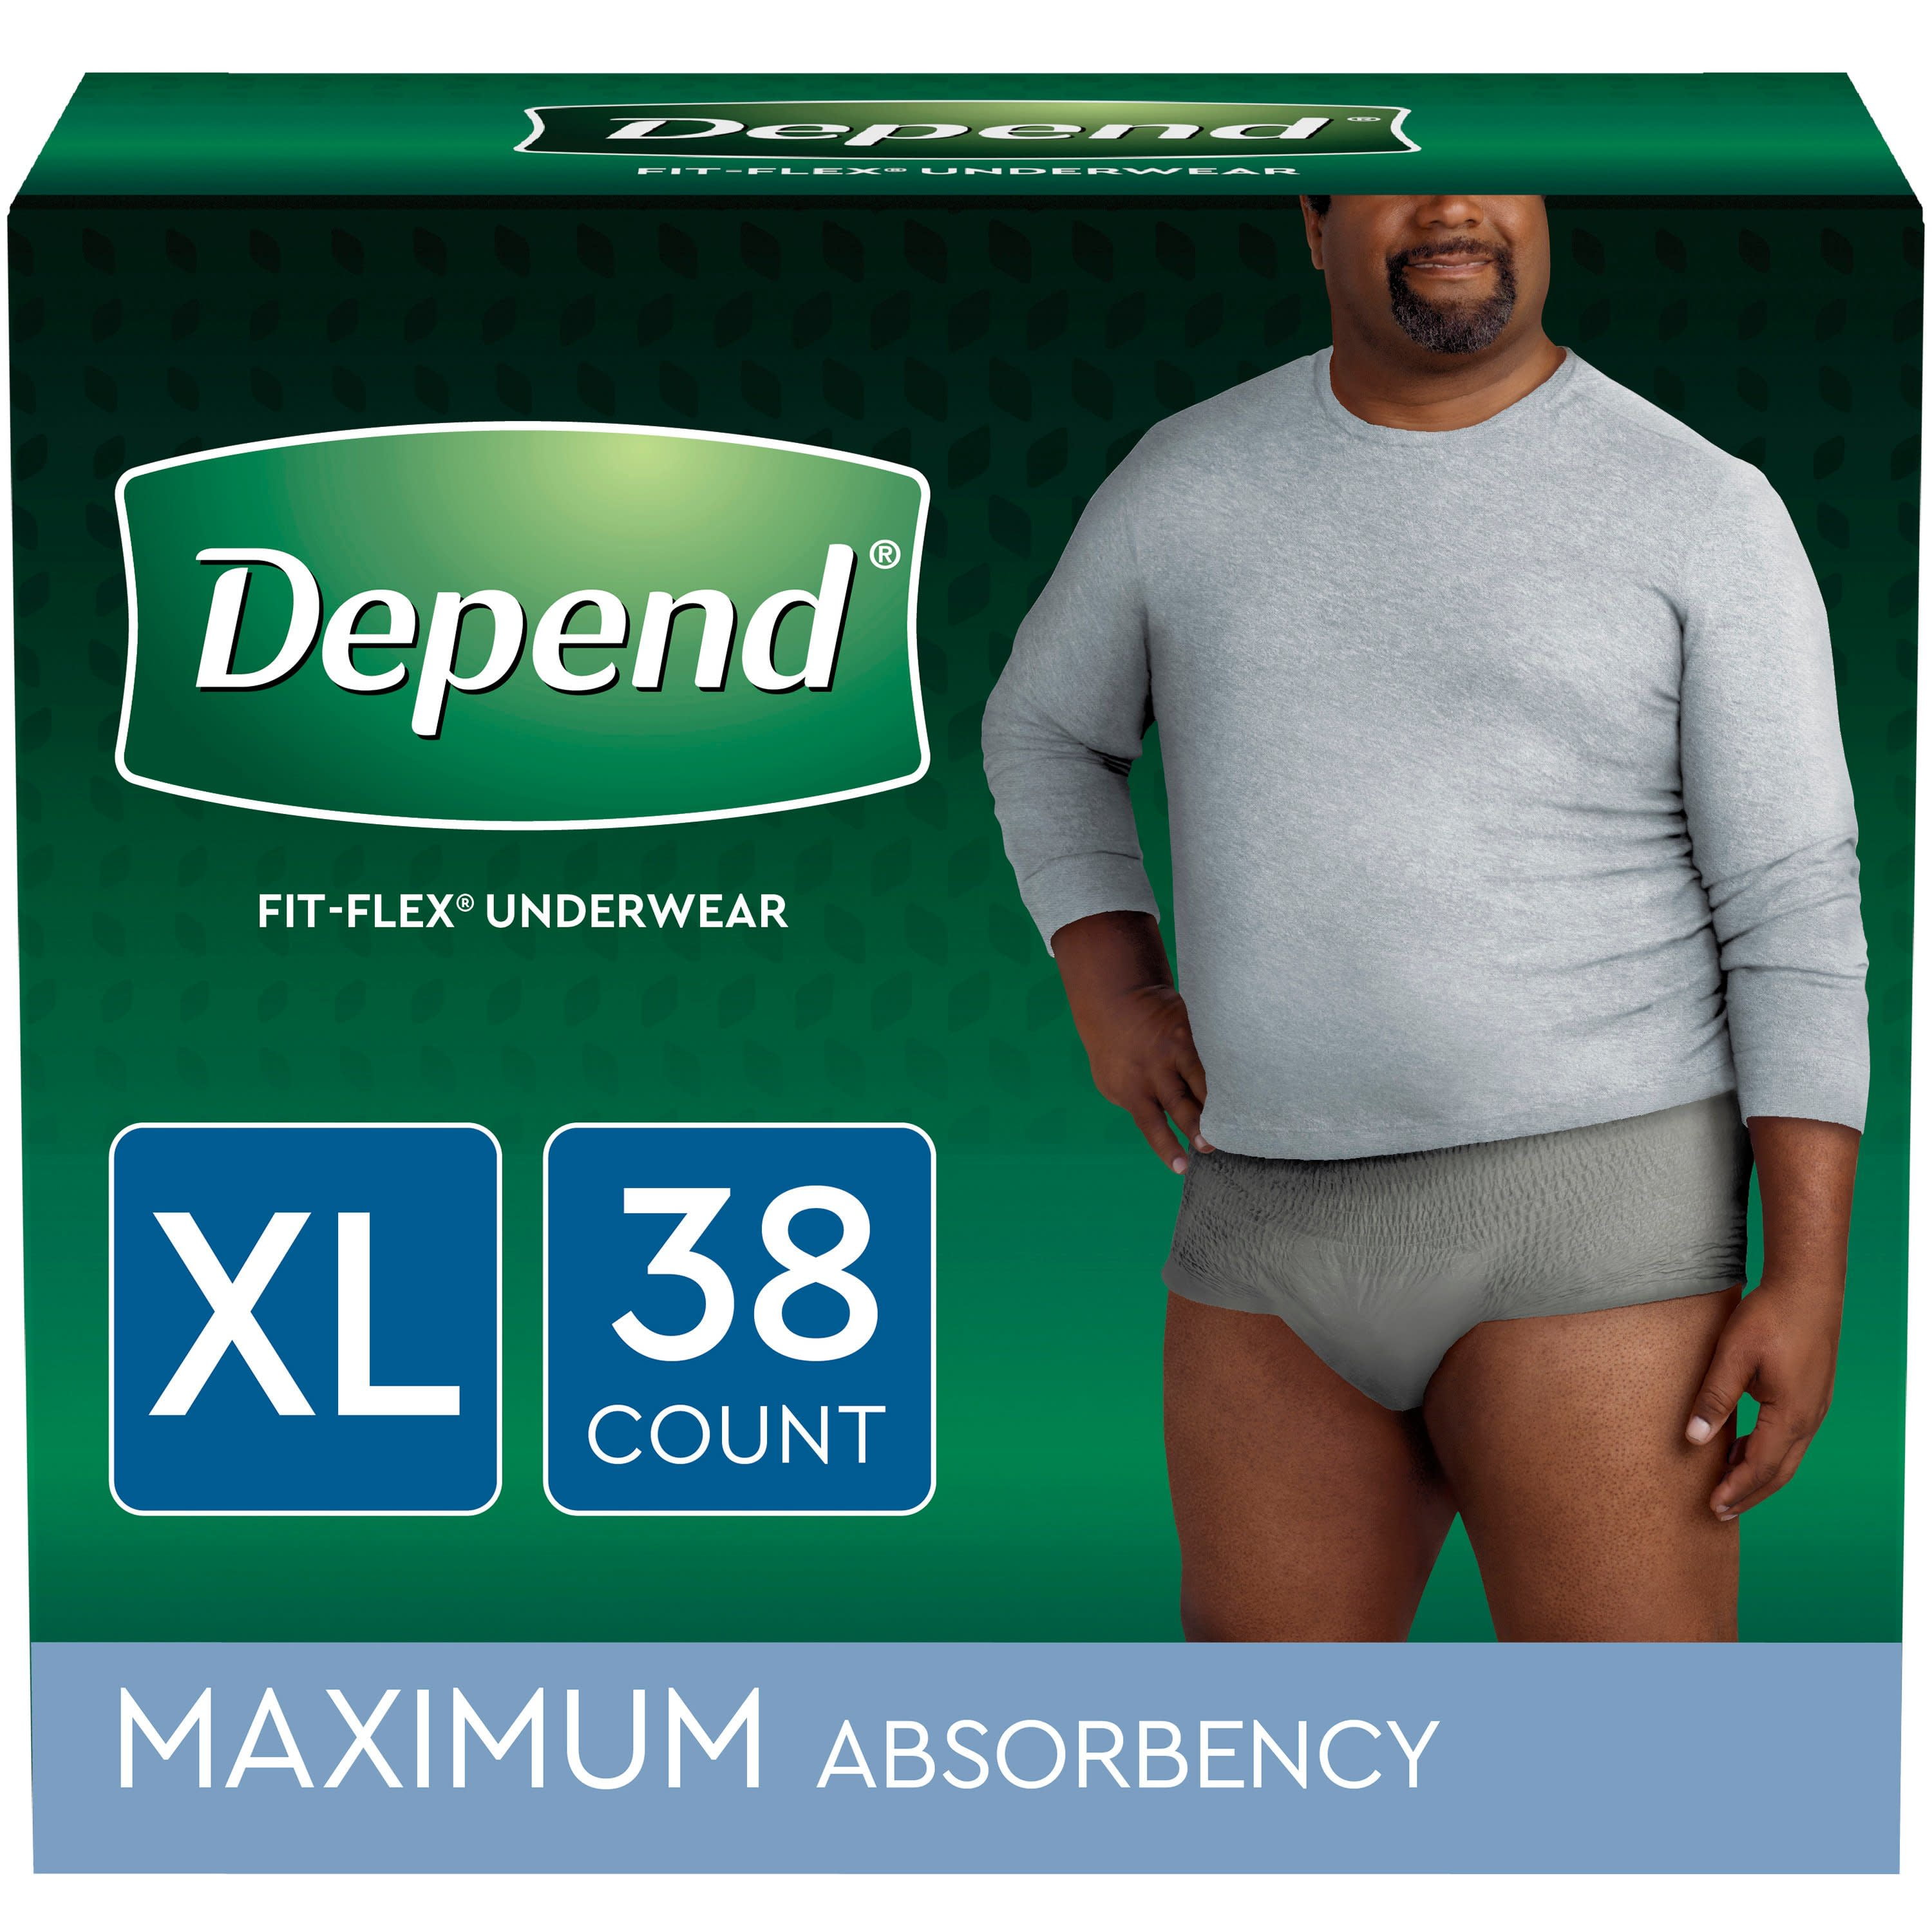 Depend Fresh Protection Adult Incontinence Underwear Maximum Absorbency  Medium Blush Underwear, 30 count - Ralphs